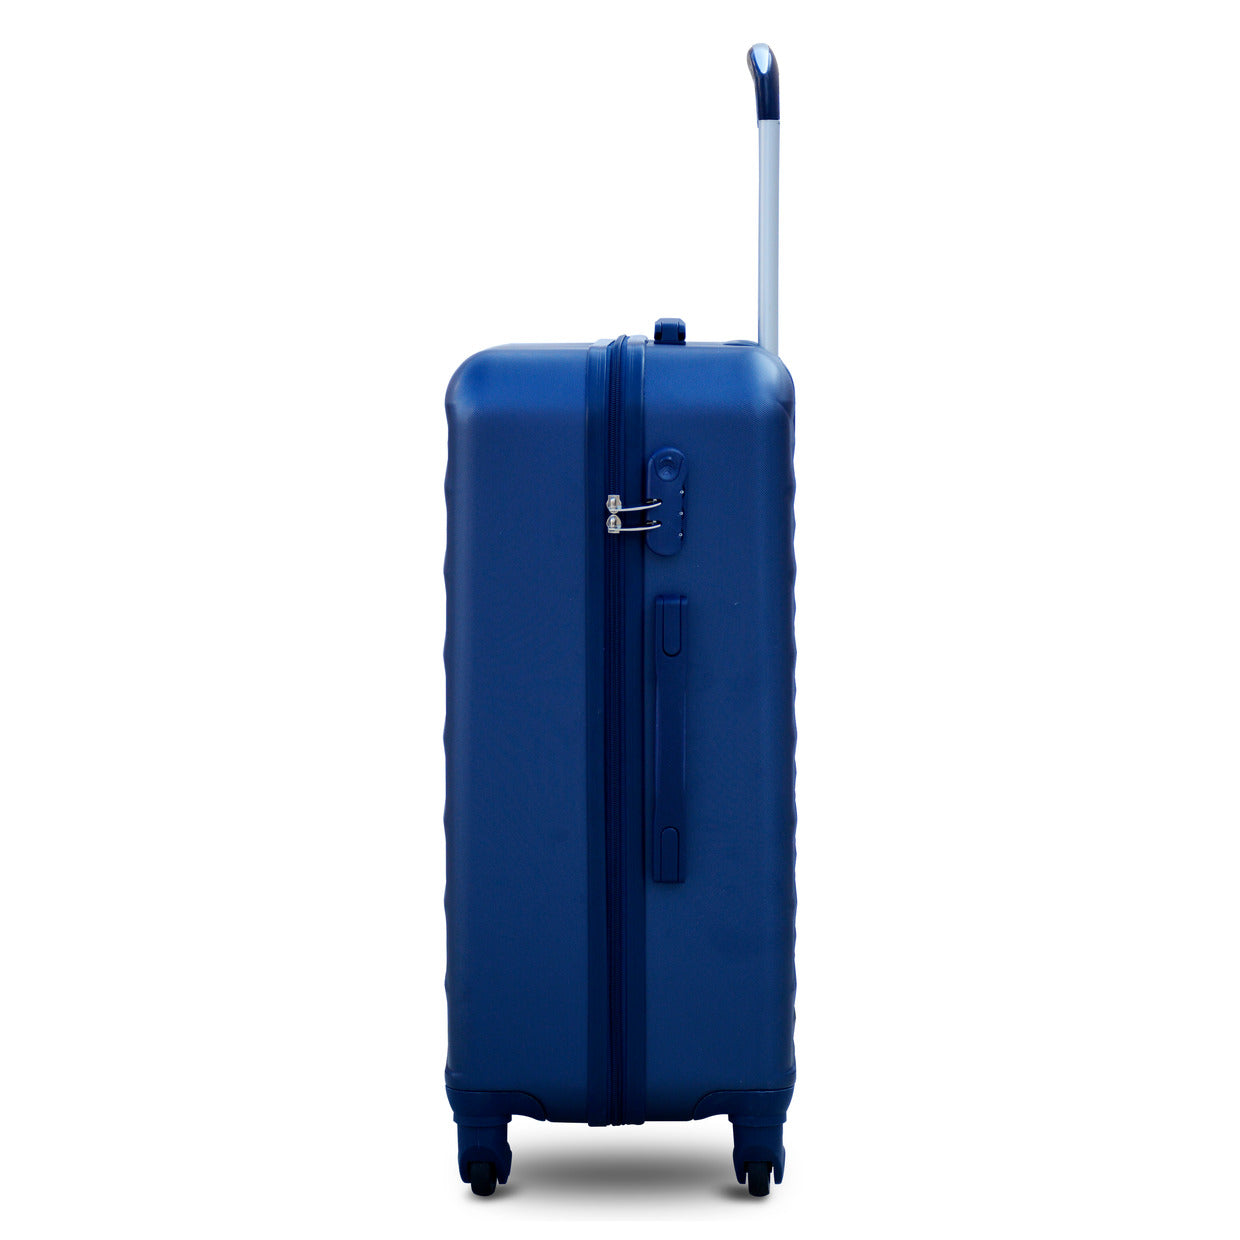 24" Blue Colour Diamond Cut ABS Luggage Lightweight Hard Case Spinner Wheel Trolley Bag